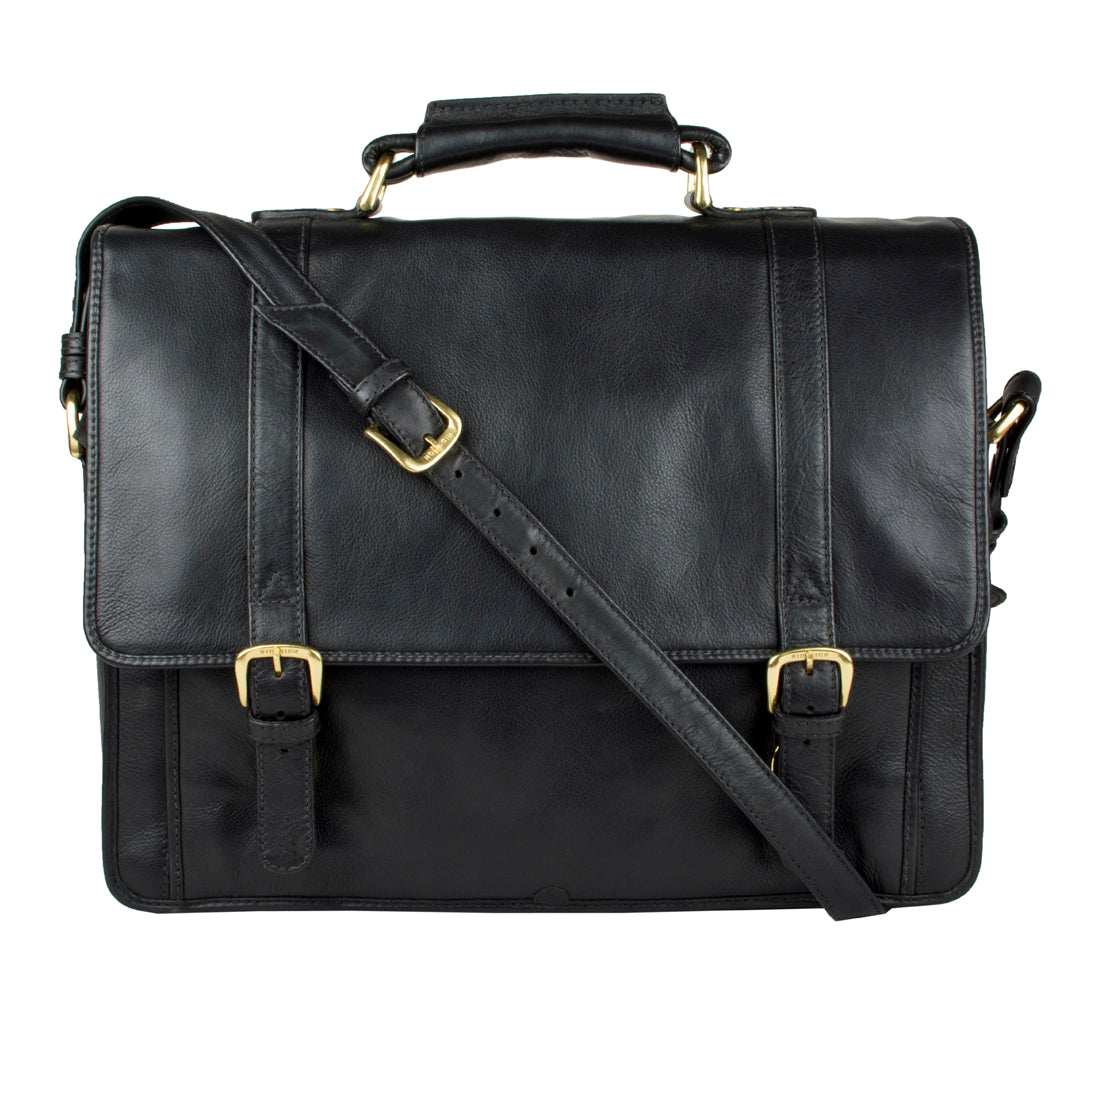 Buy Black Andre 4215 Briefcase Online - Hidesign